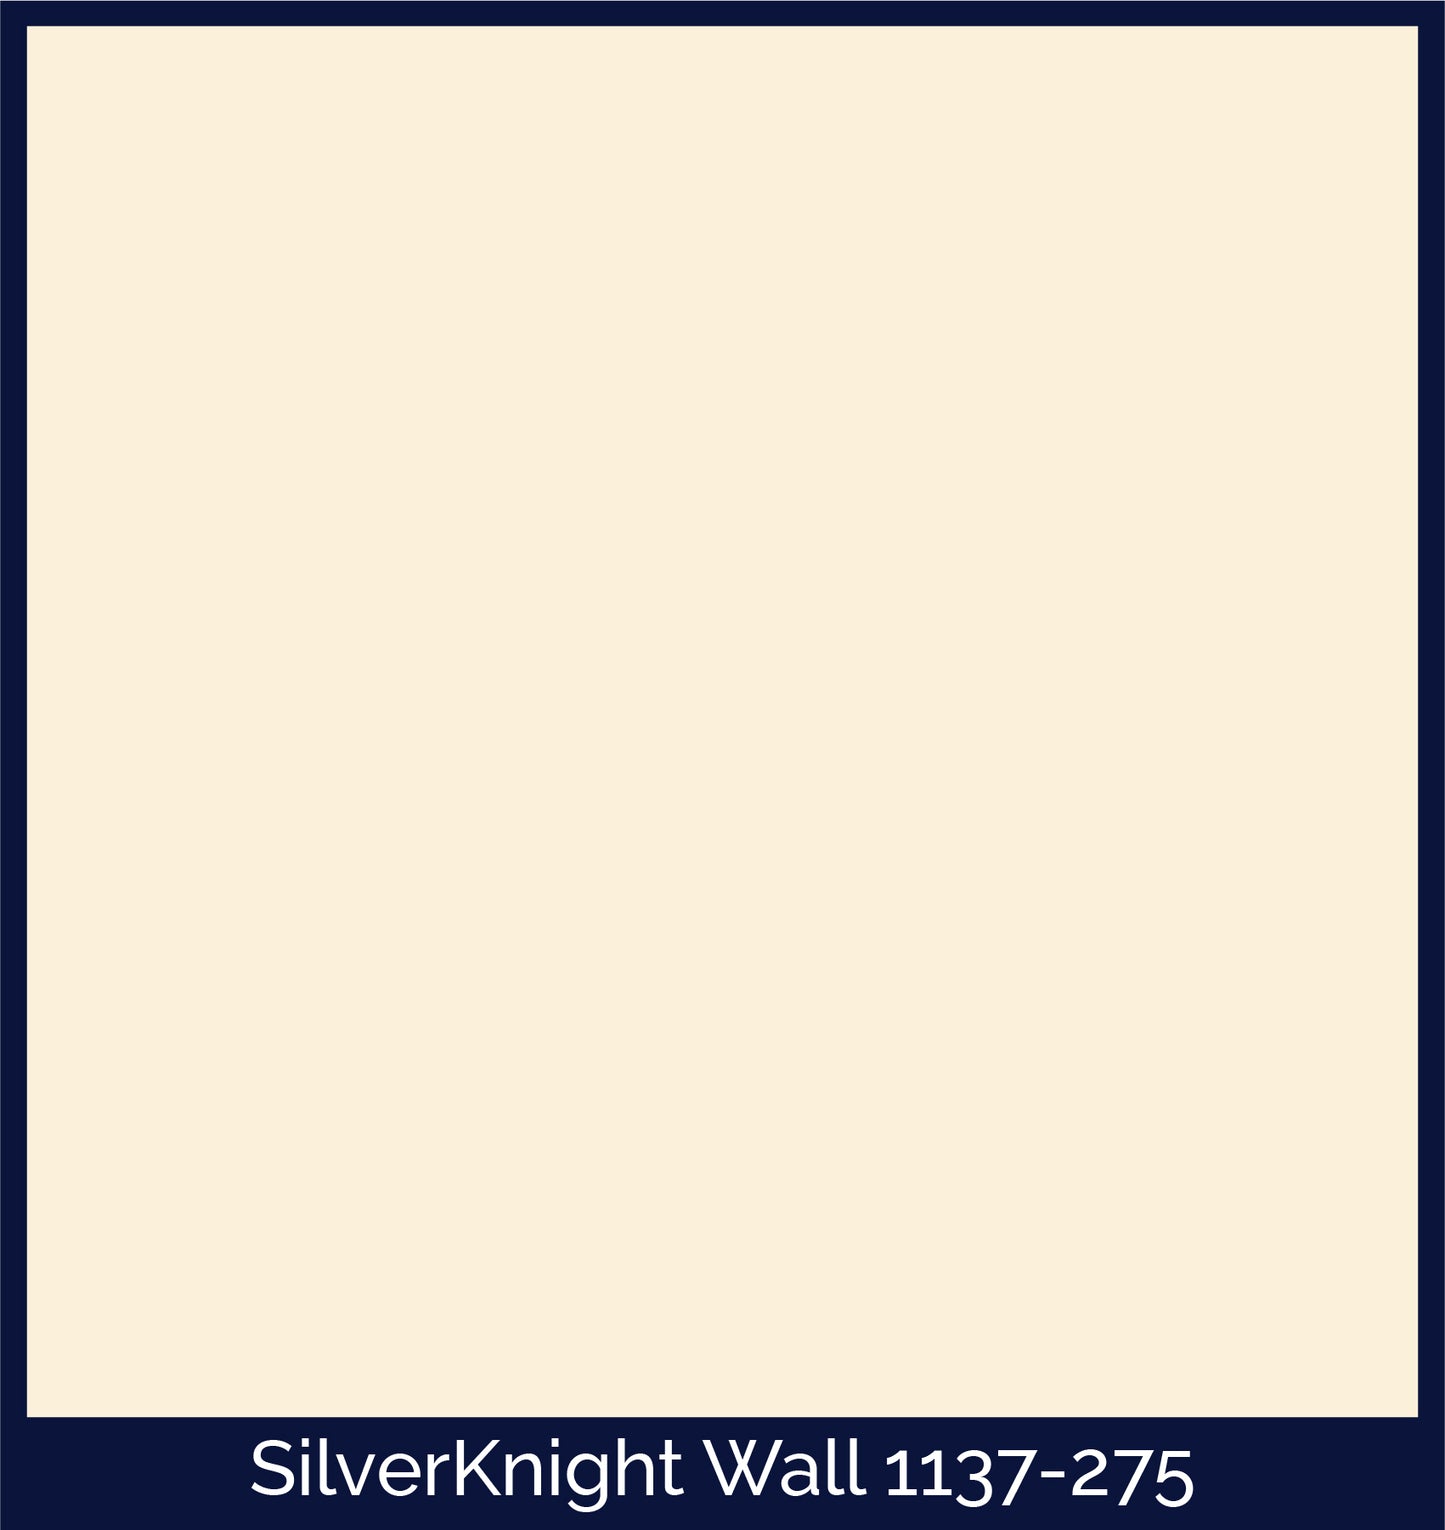 Grabo SilverKnight Wall Protection